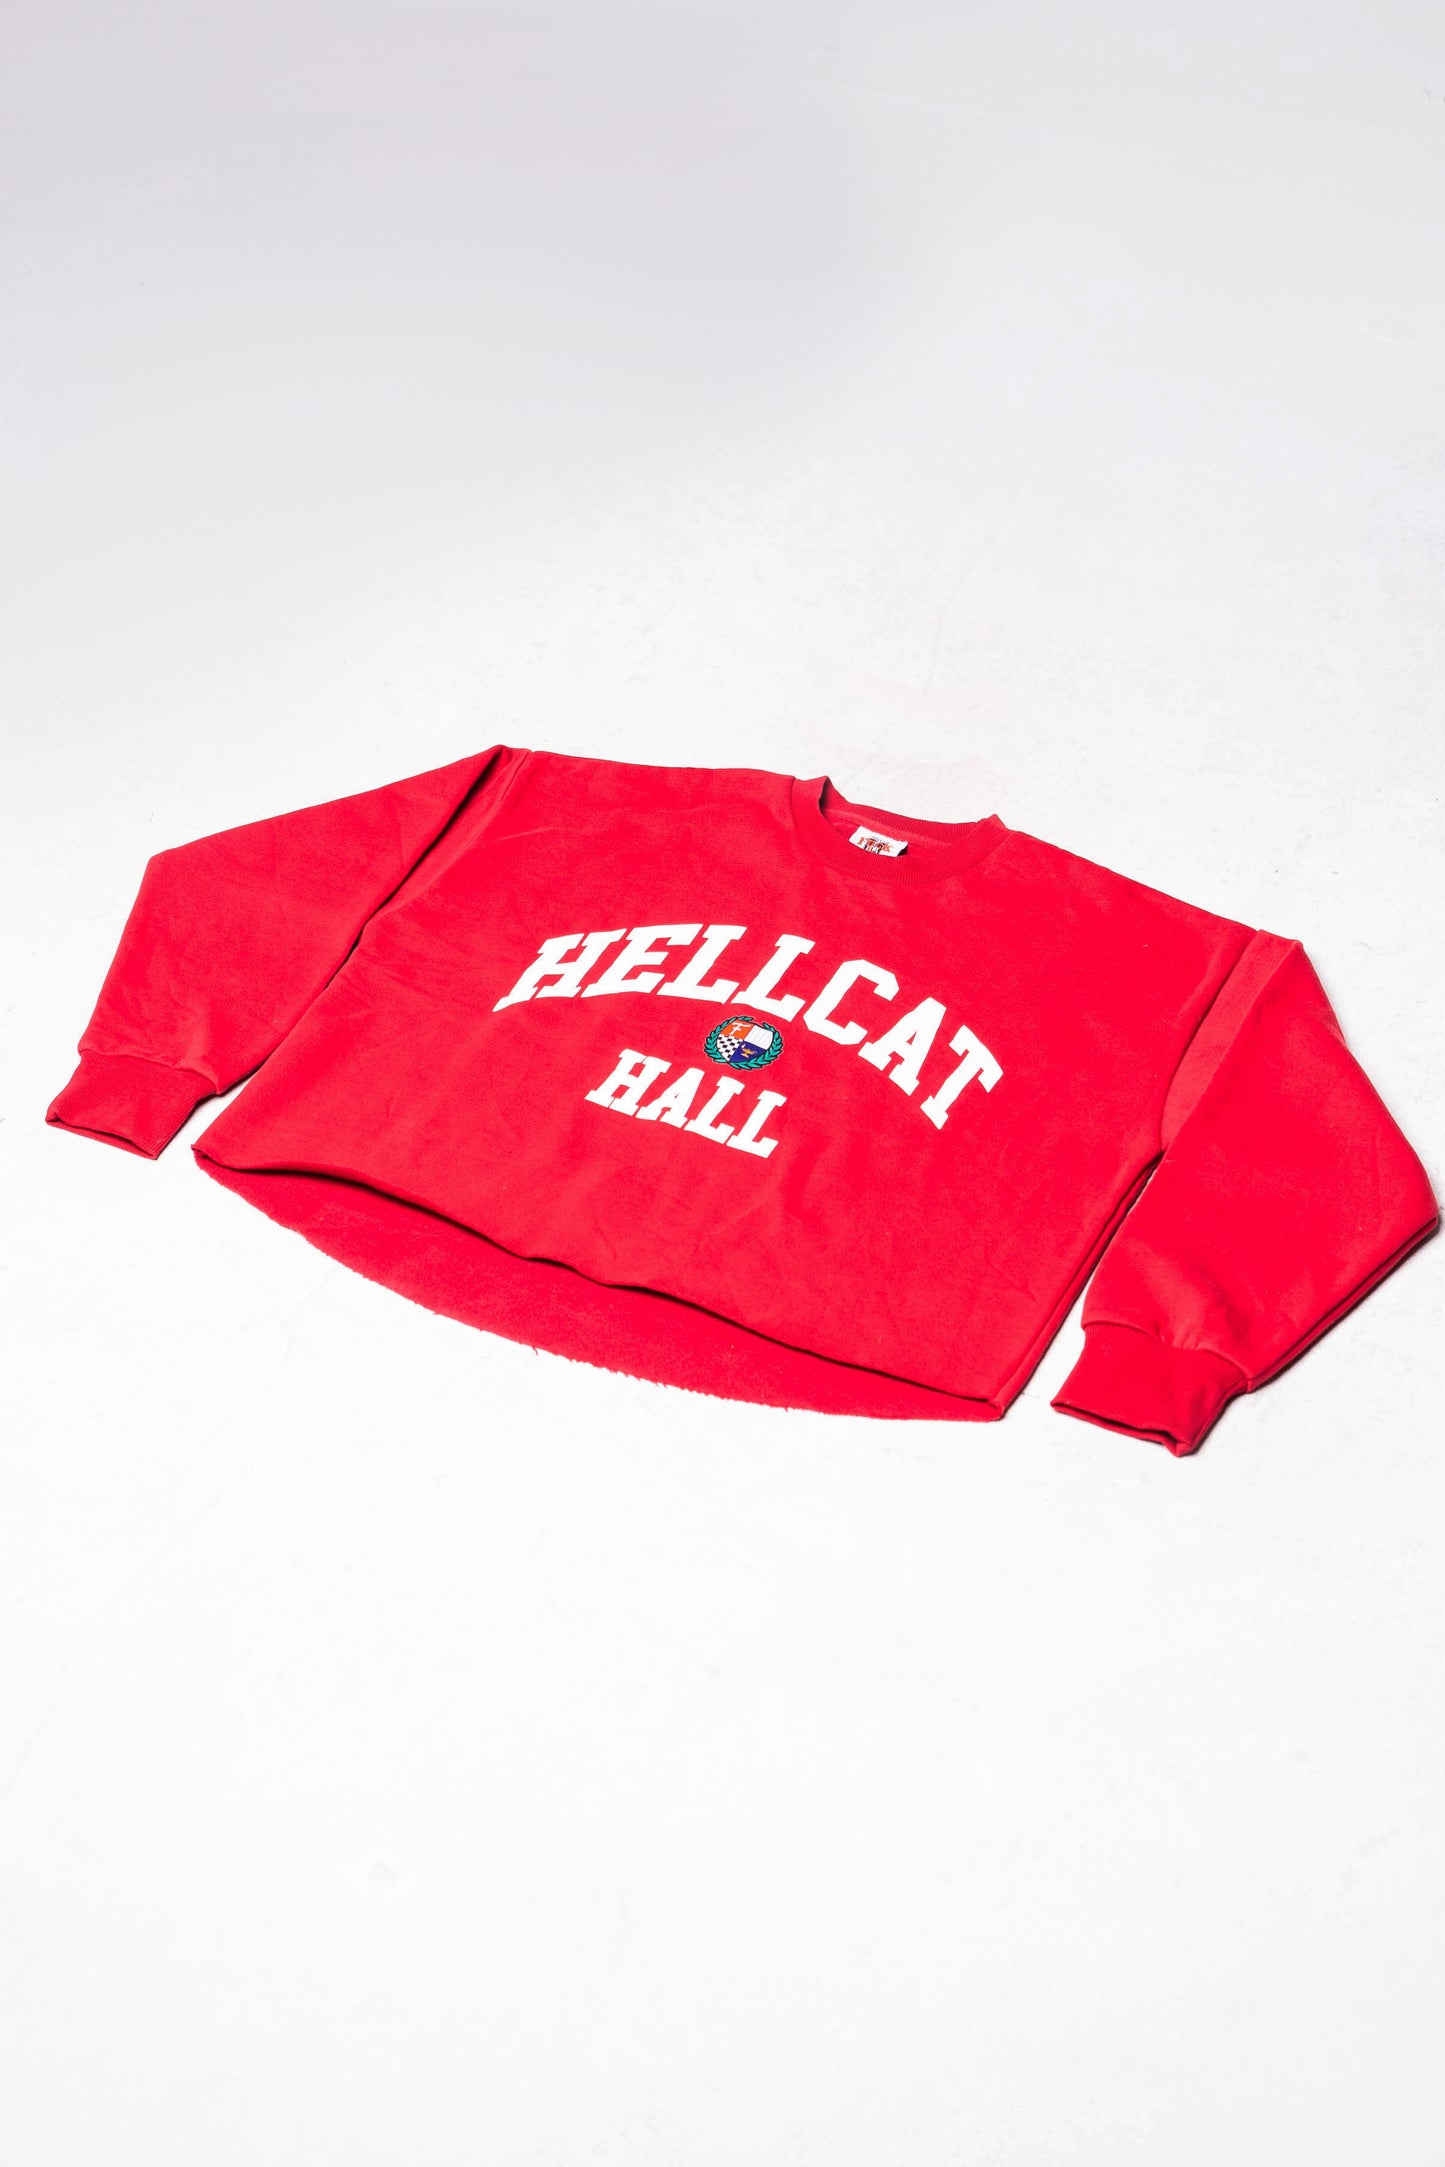 Red Hellcat Hall